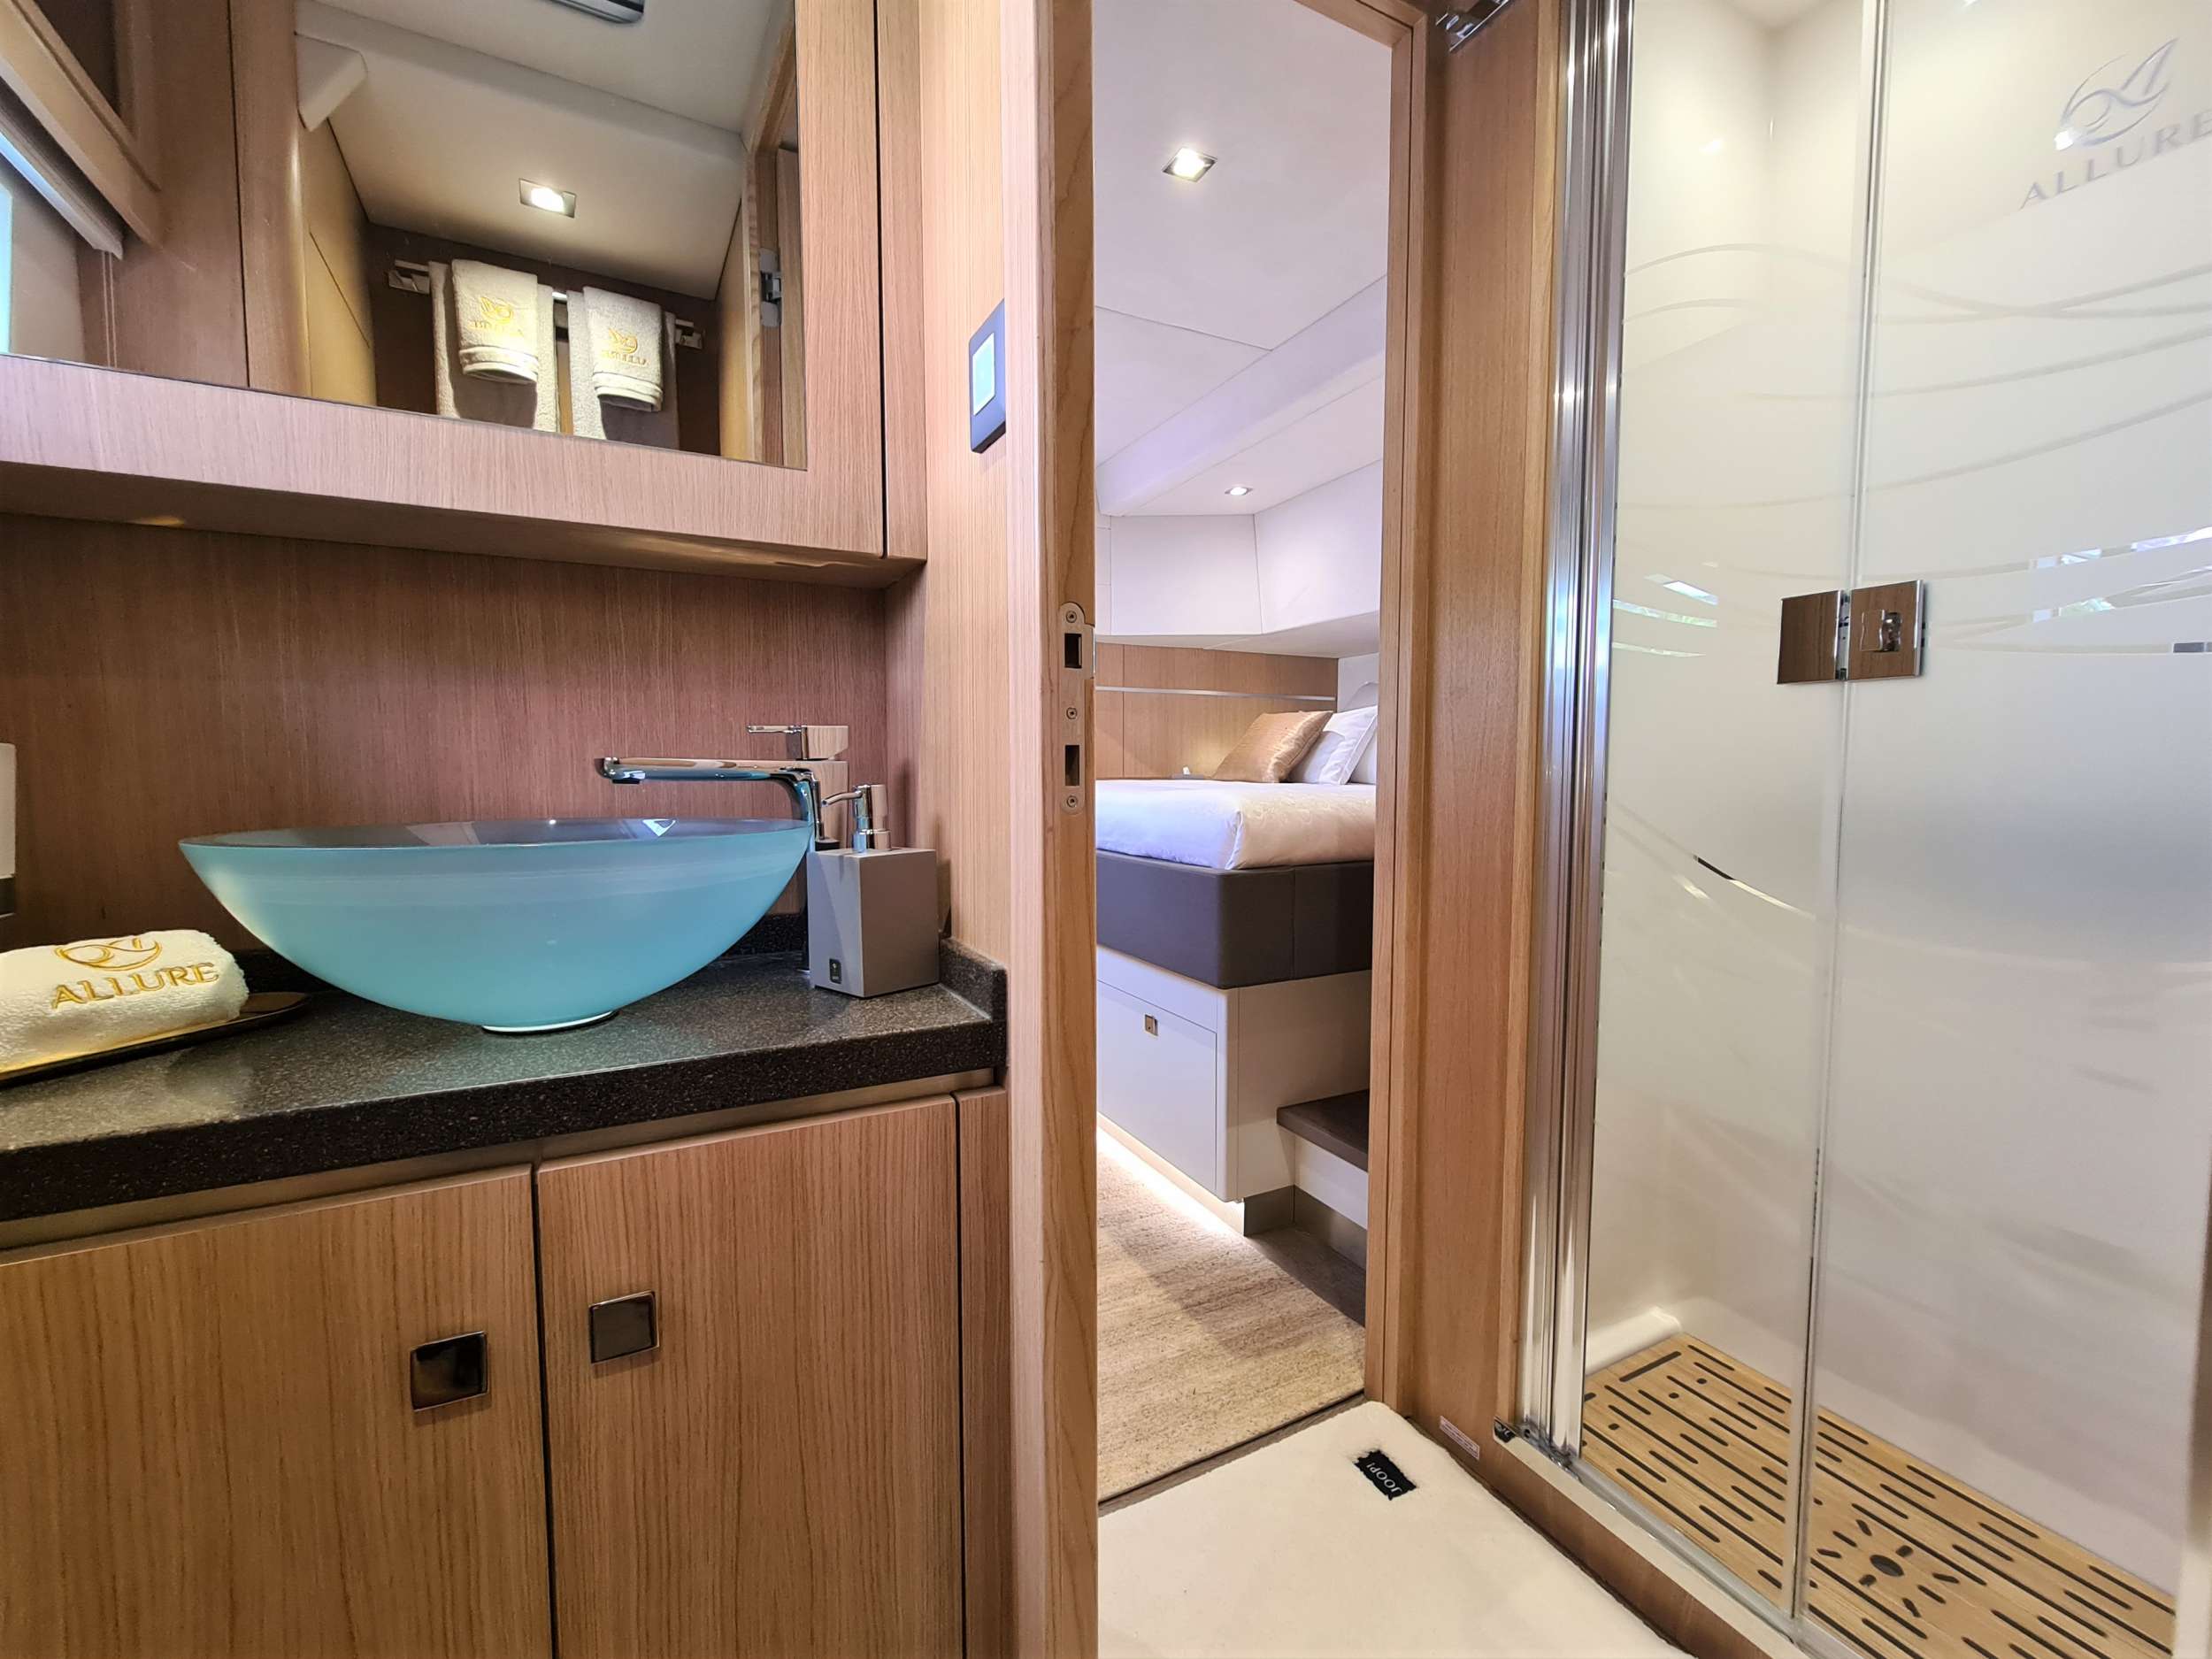 Catamaran Yacht 'ALLURE 64' Guest Bathroom, 6 PAX, 3 Crew, 64.00 Ft, 19.00 Meters, Built 2020, Privilege